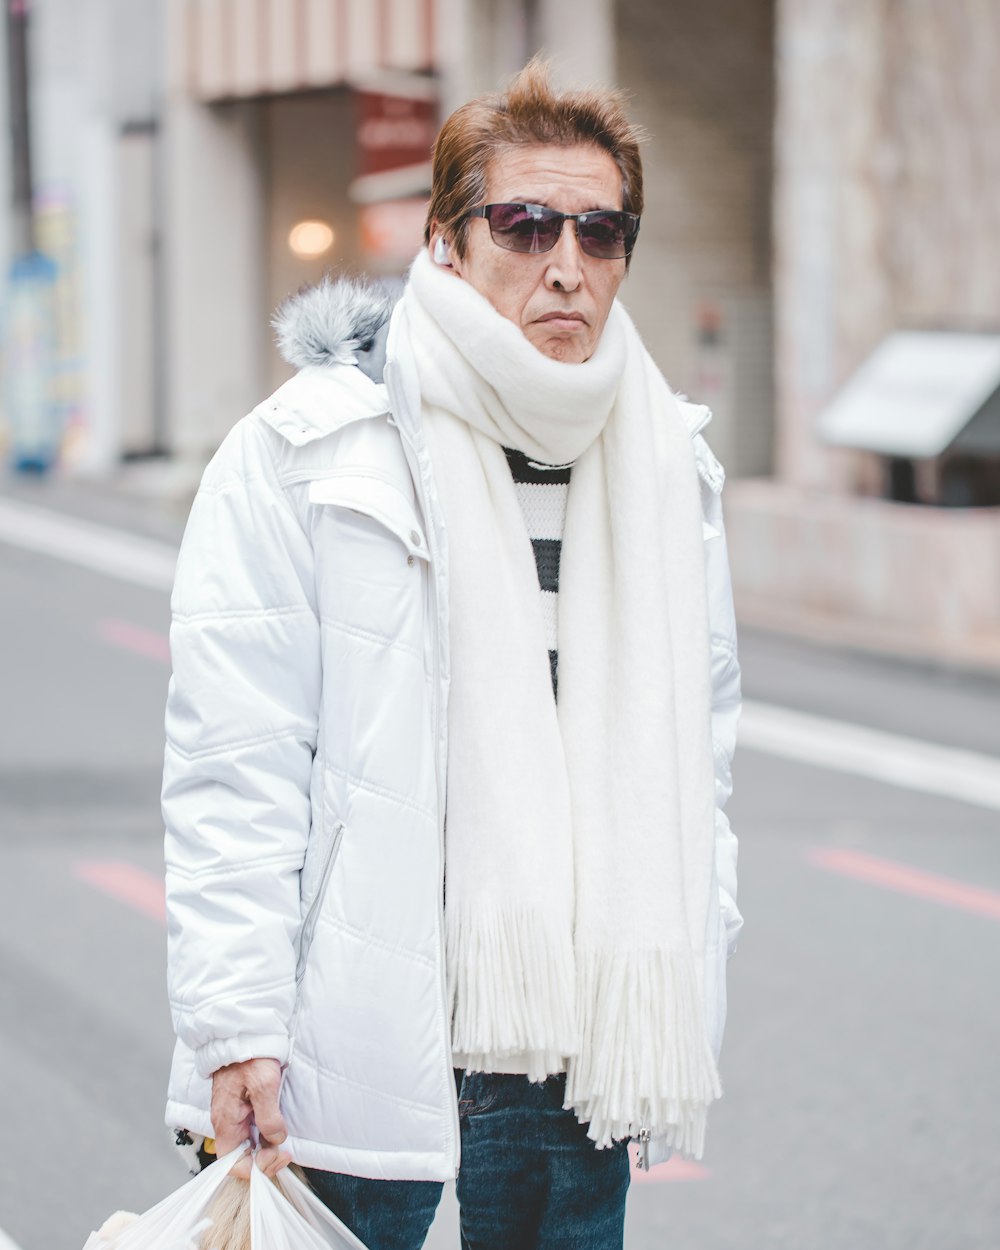 man in white parka jacket and white scarf walking on street at daytime